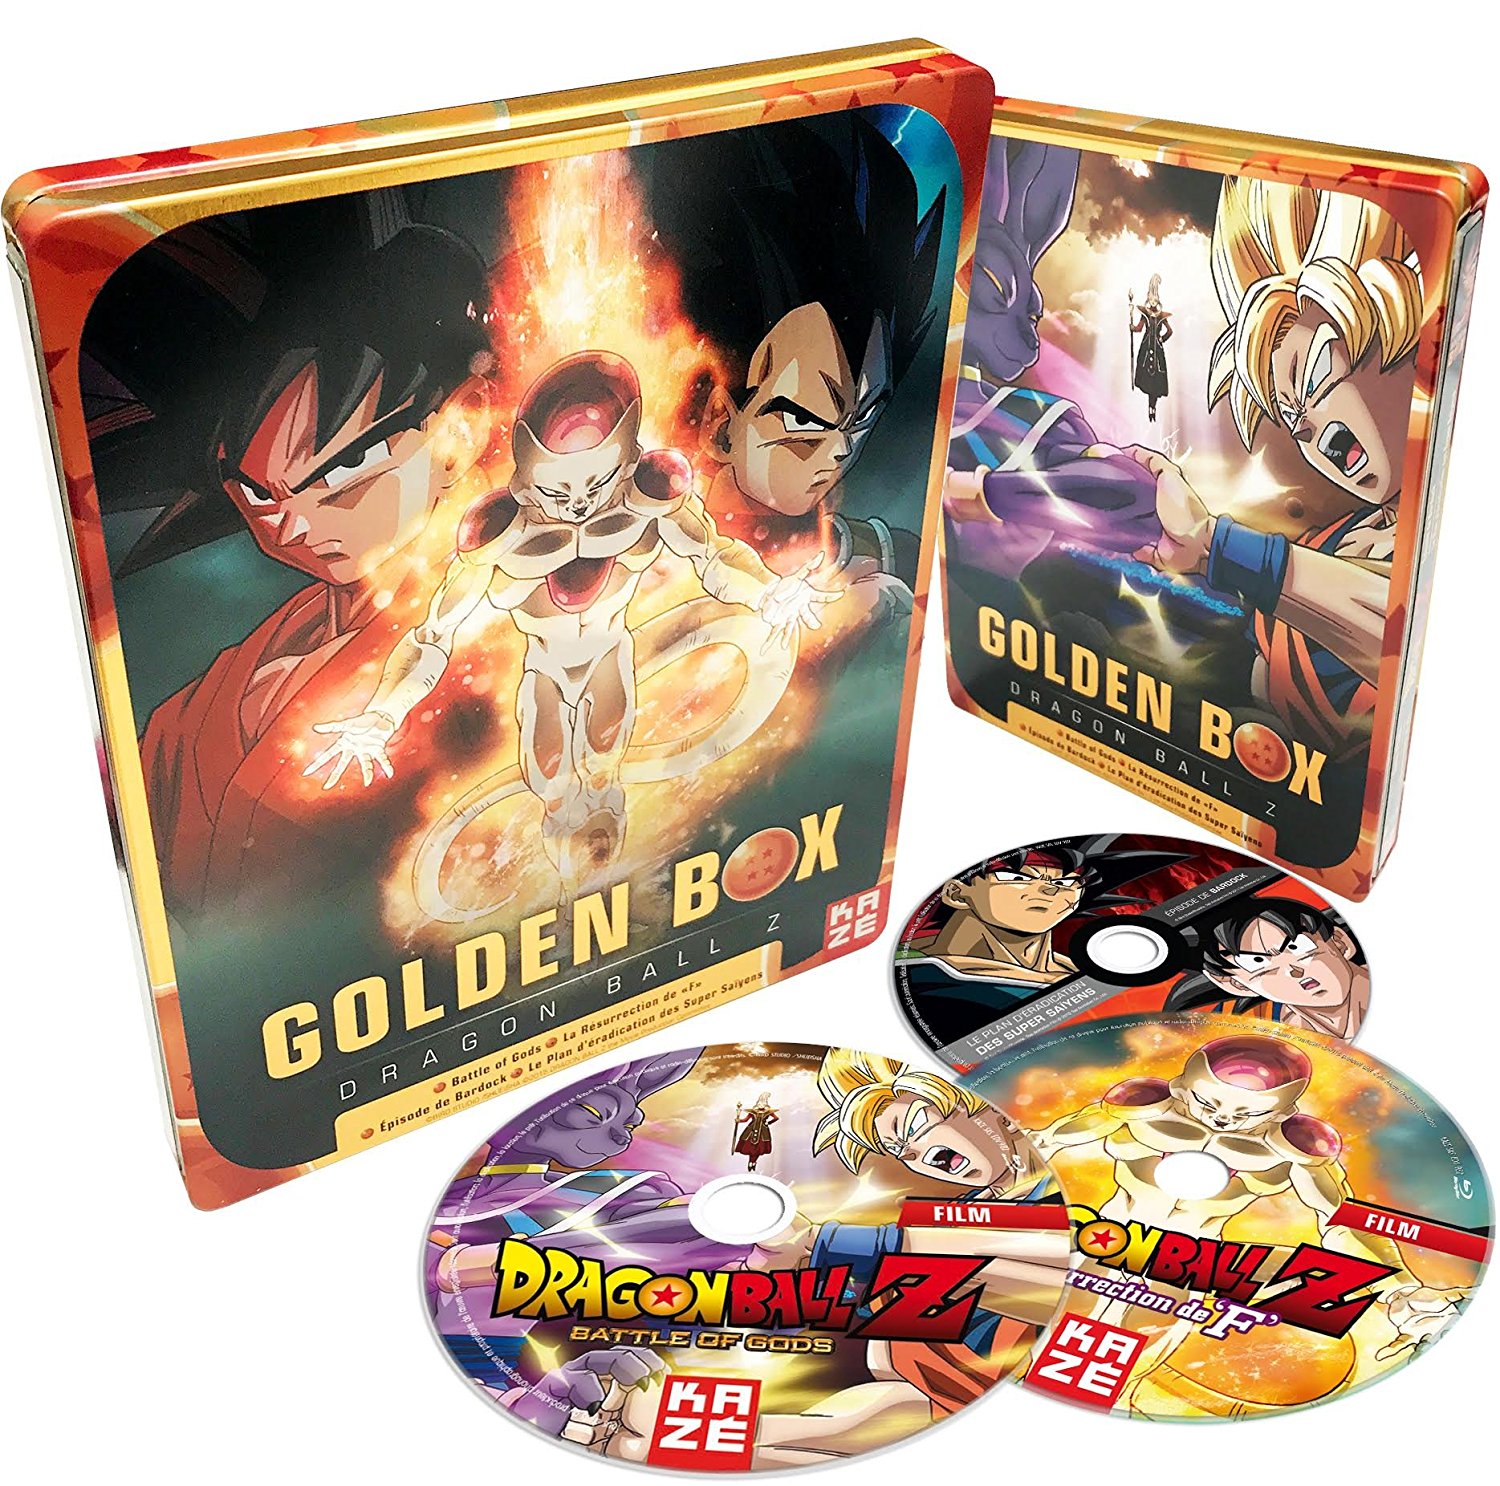 Dragon Ball z Golden Box steelbook